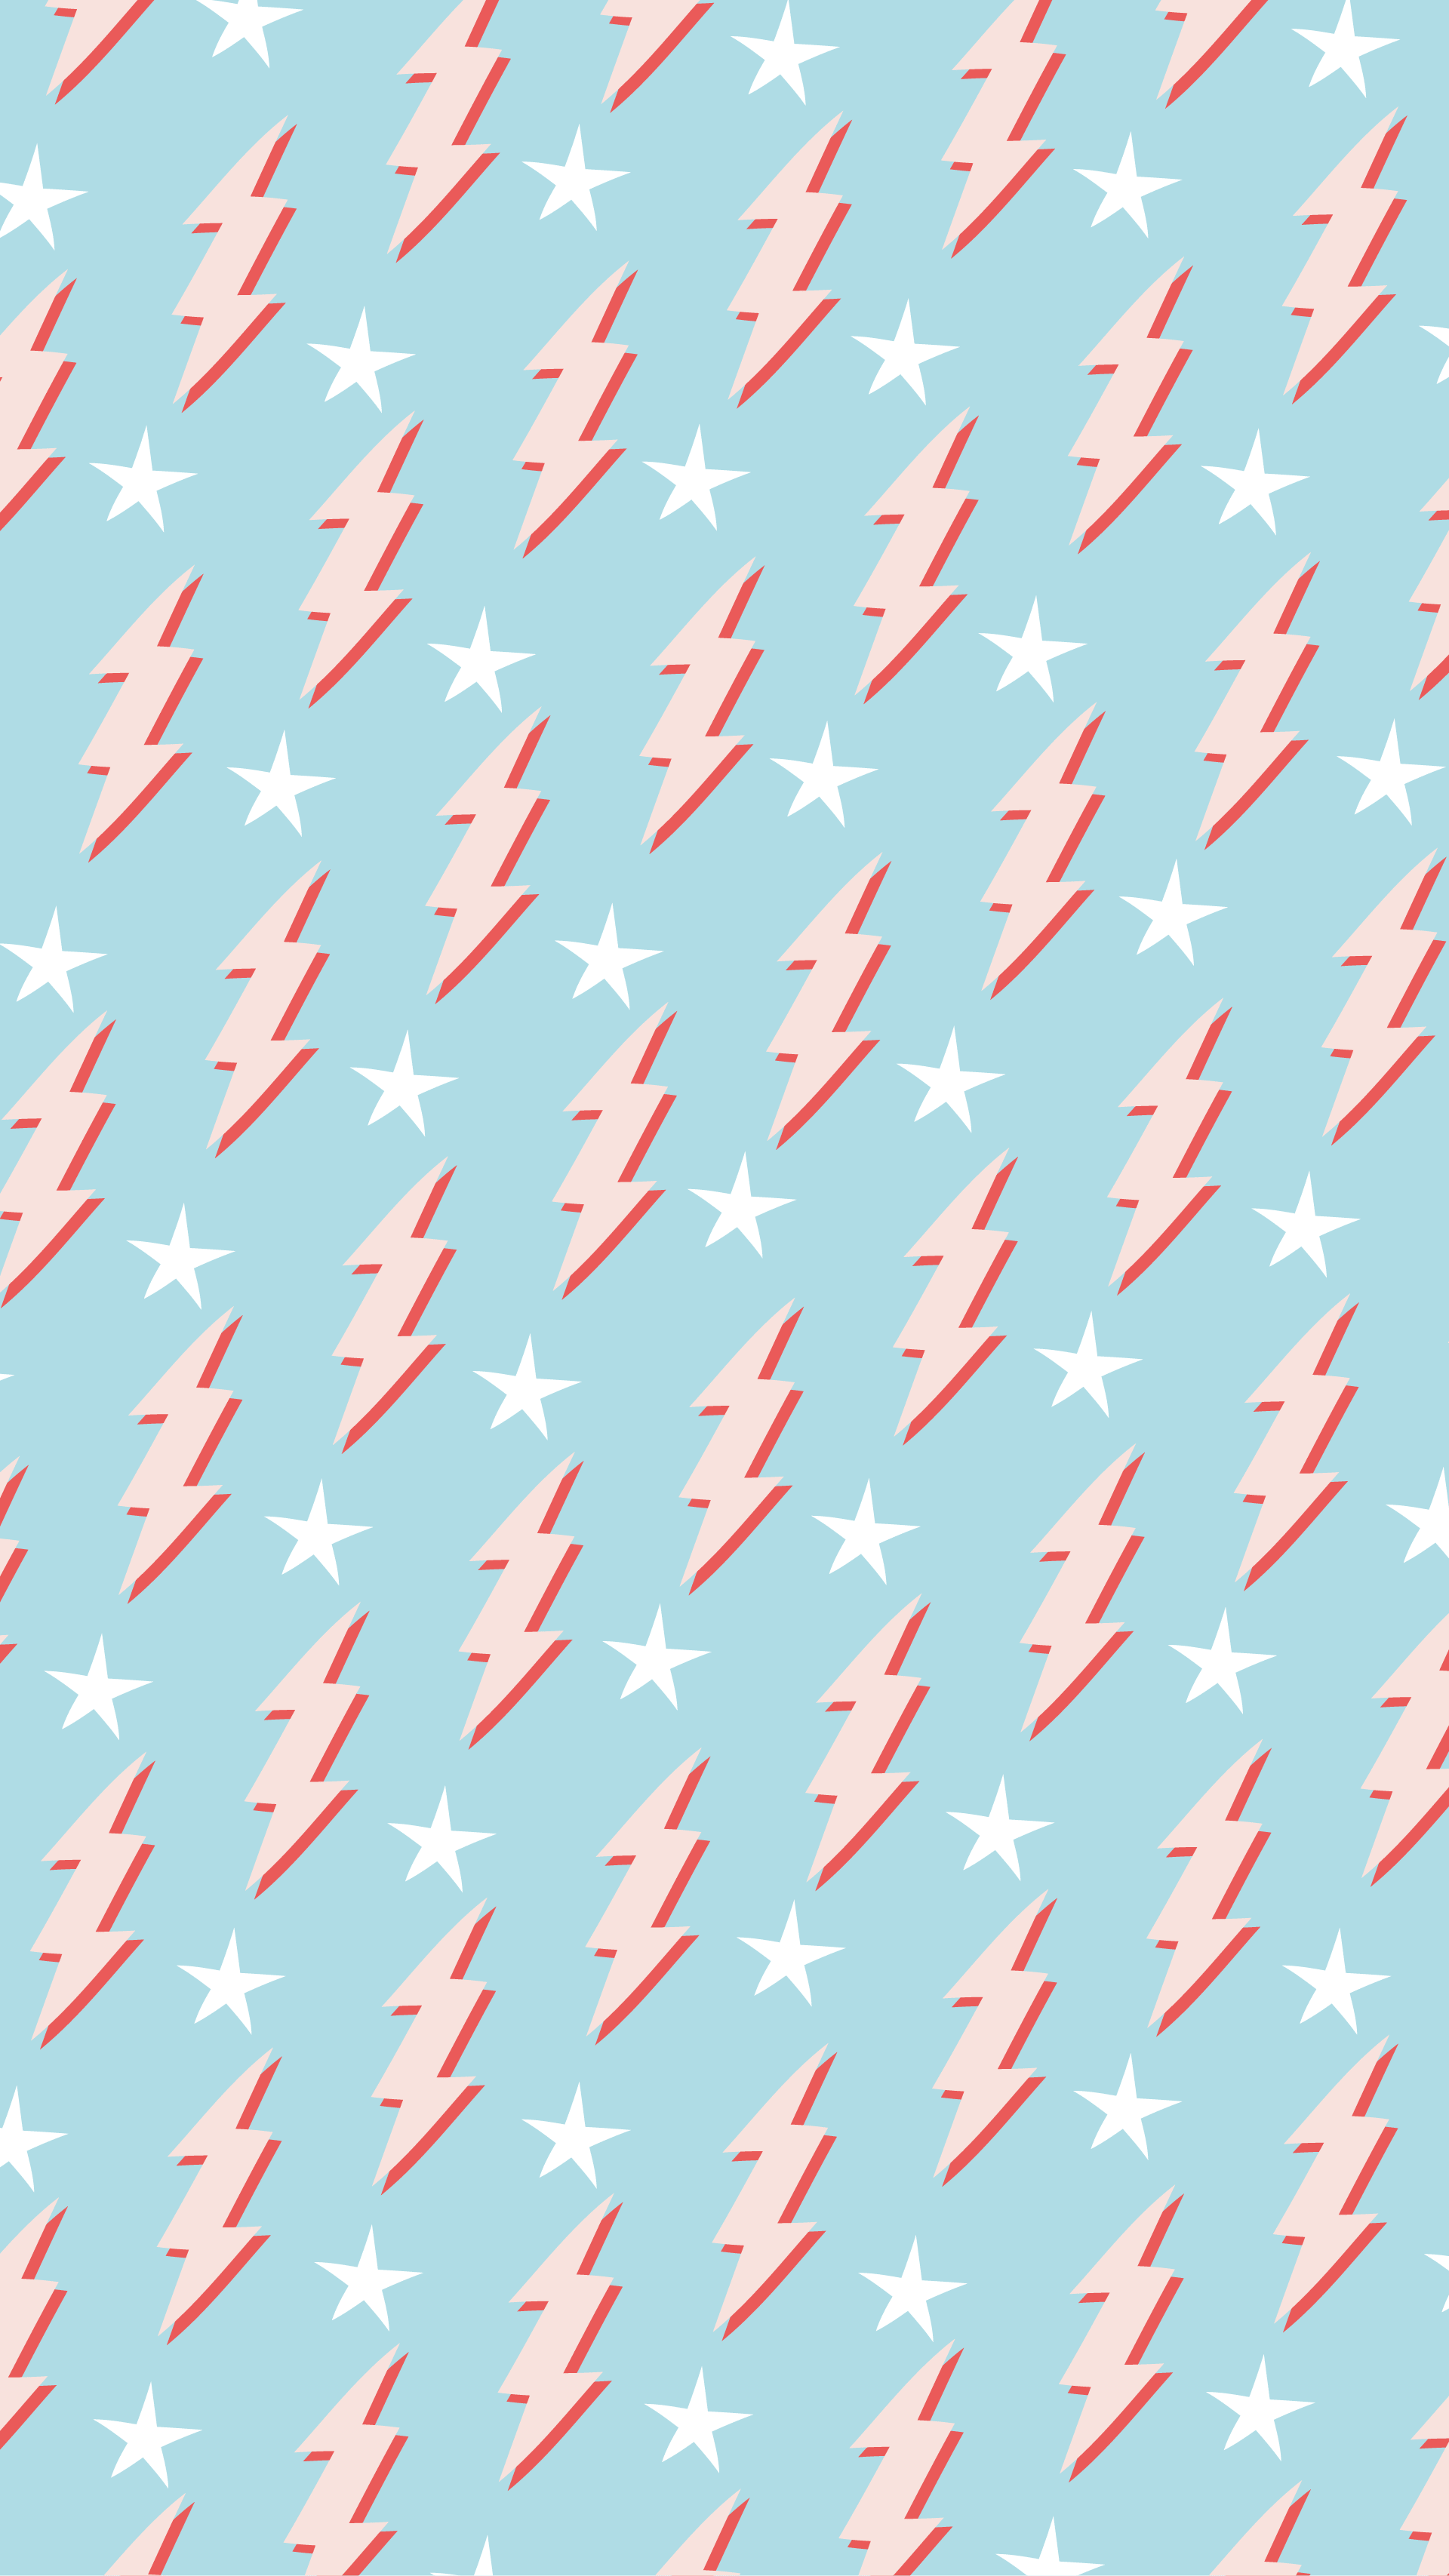 A pattern of lightning bolts and stars - Preppy, lightning